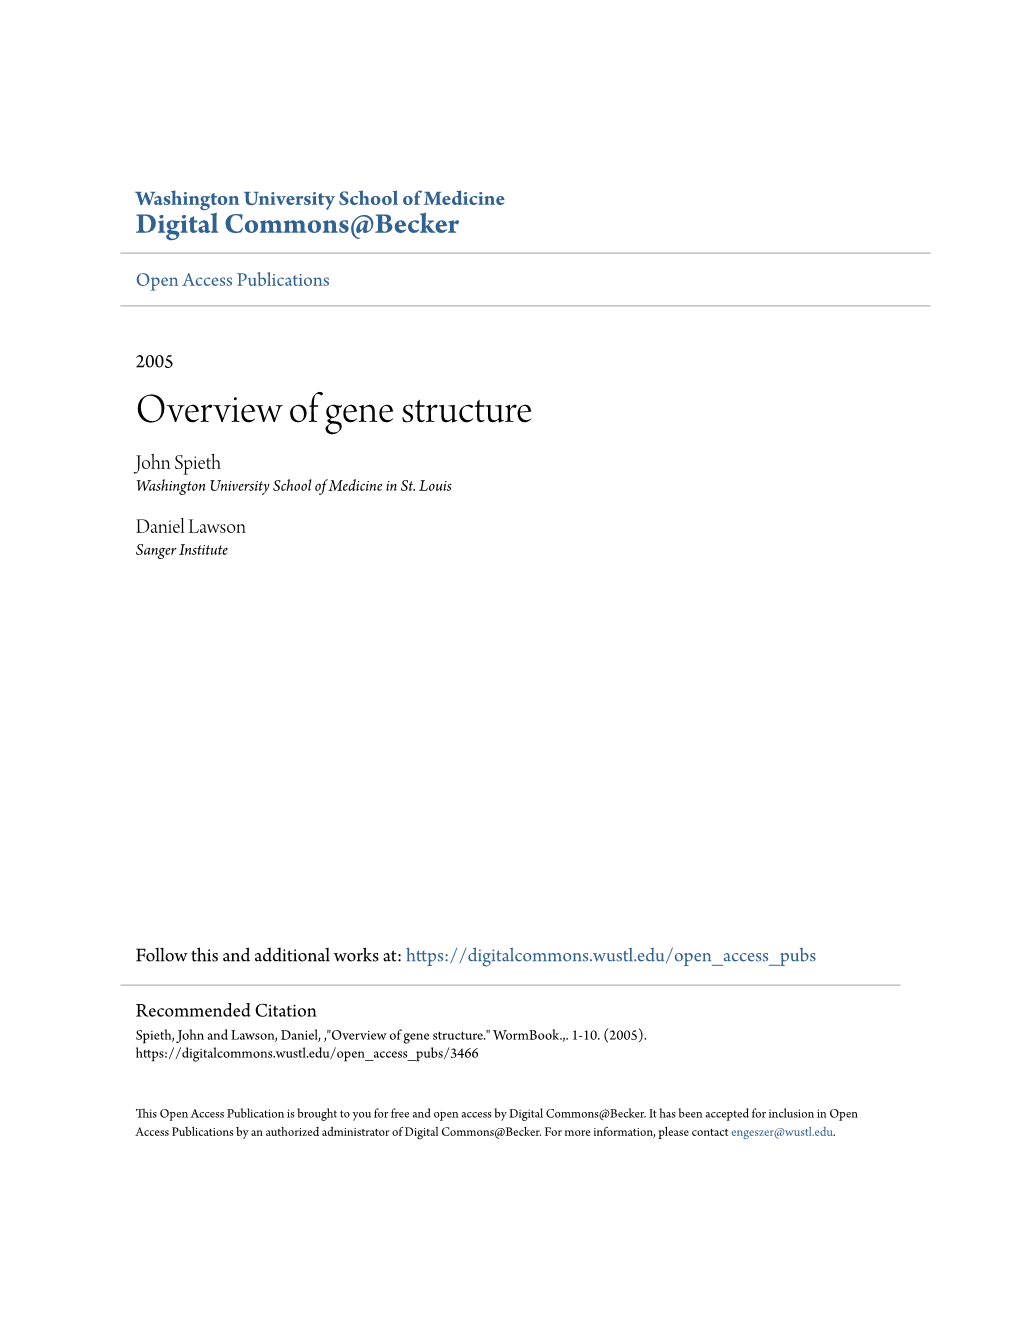 Overview of Gene Structure John Spieth Washington University School of Medicine in St